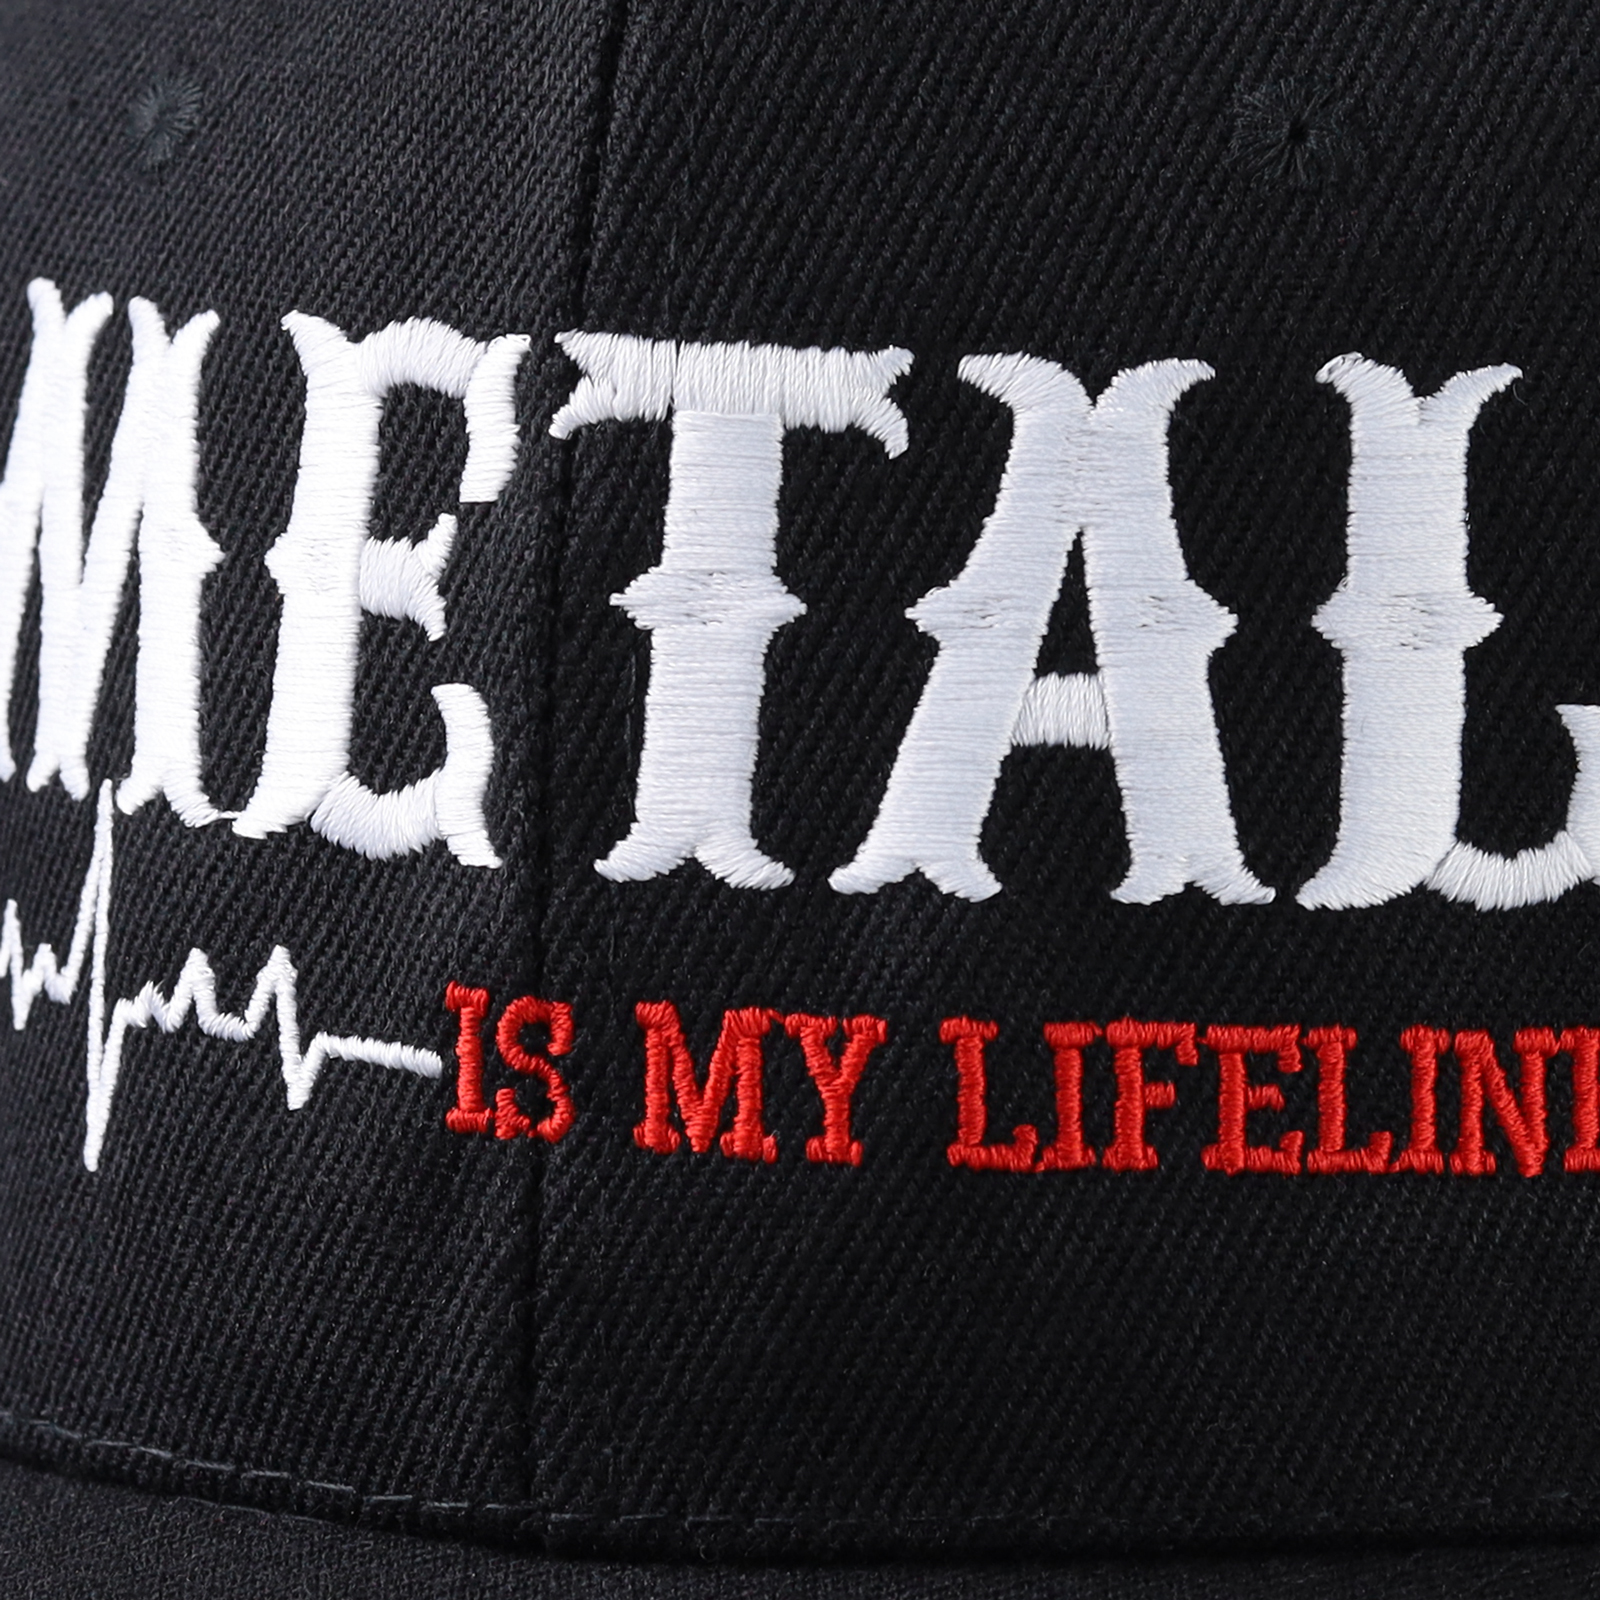 Metal is my lifeline - Kappe